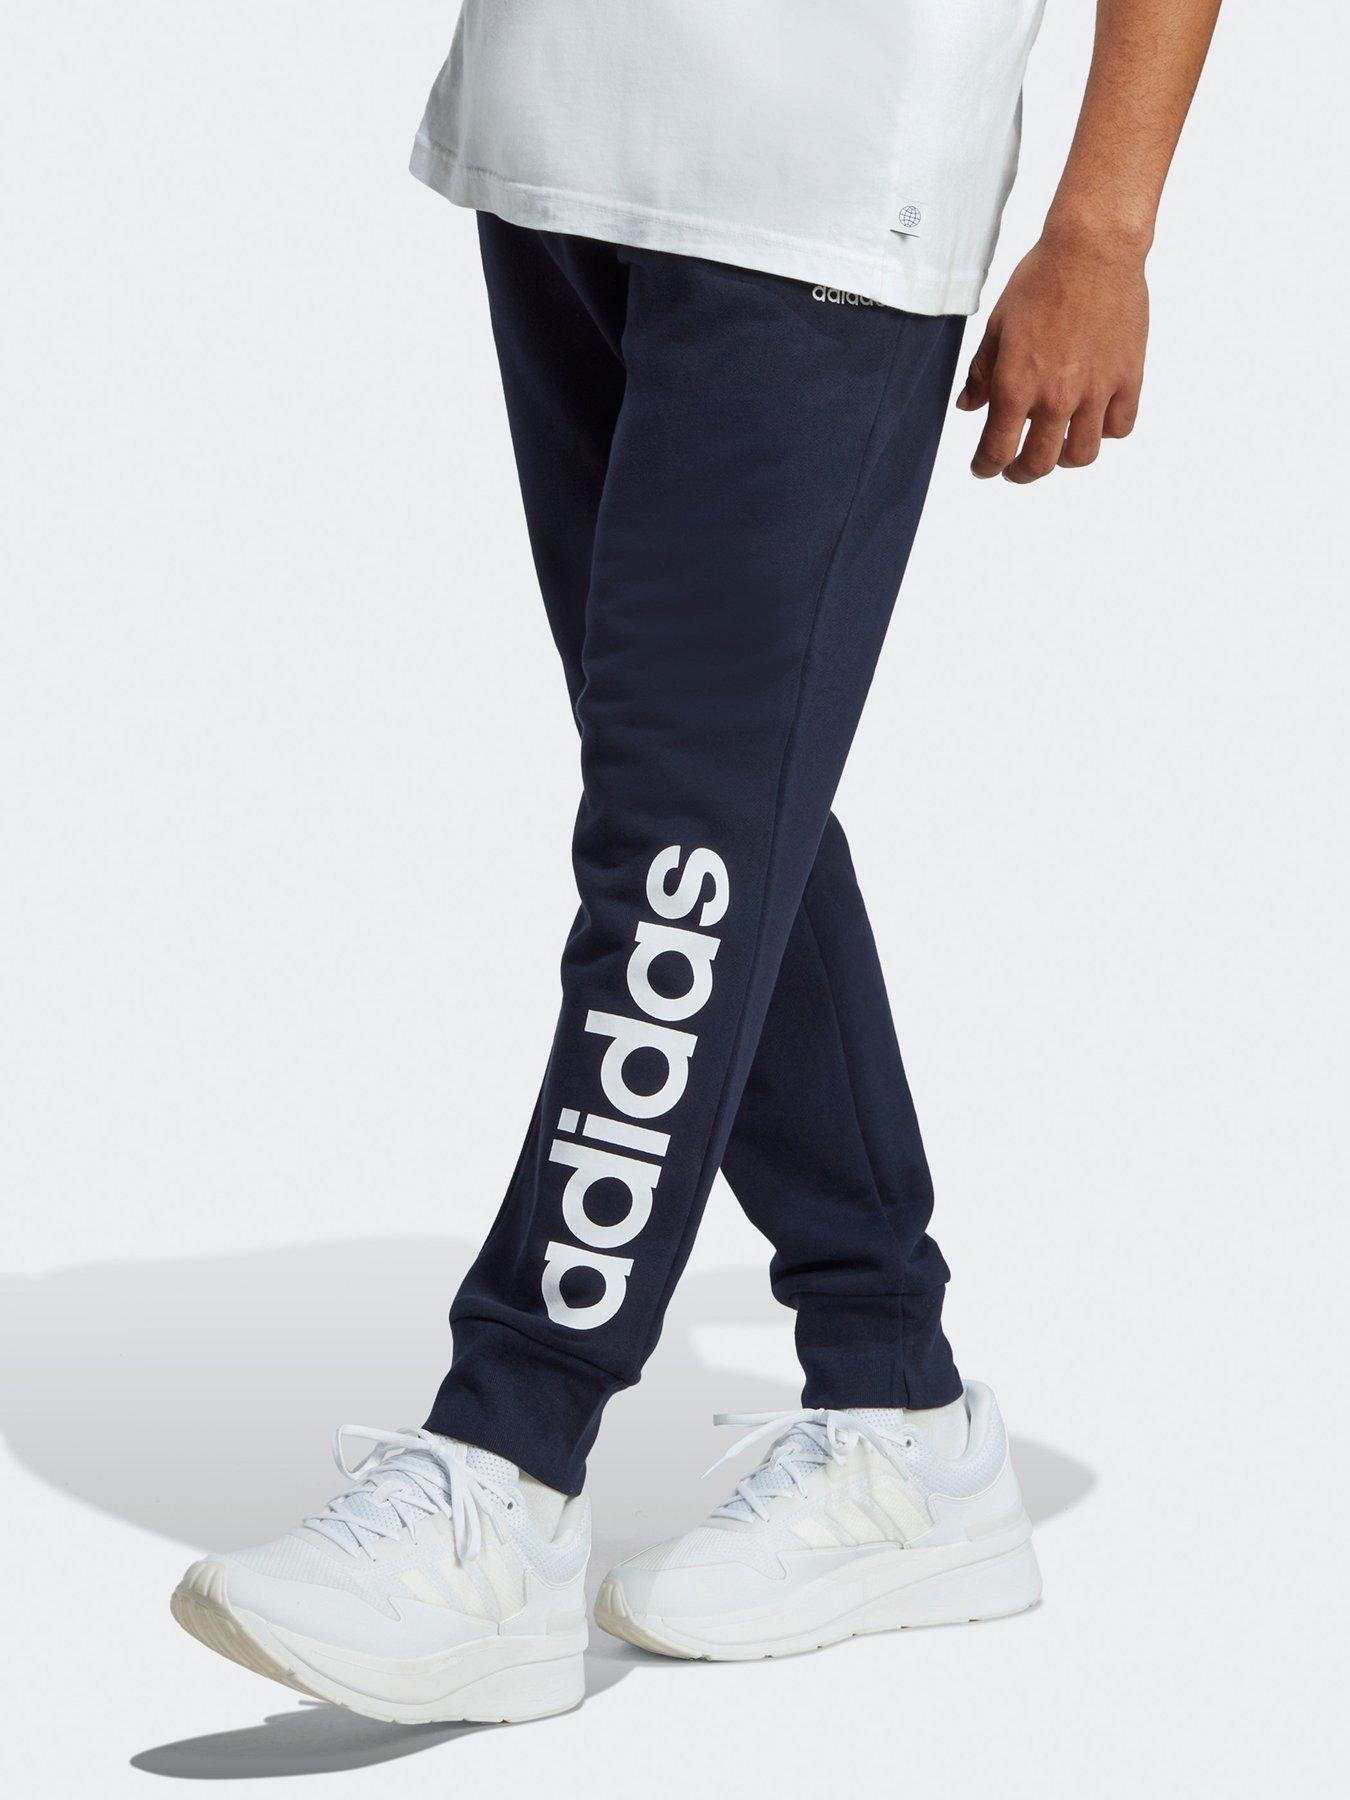 Adidas, Joggers, Men